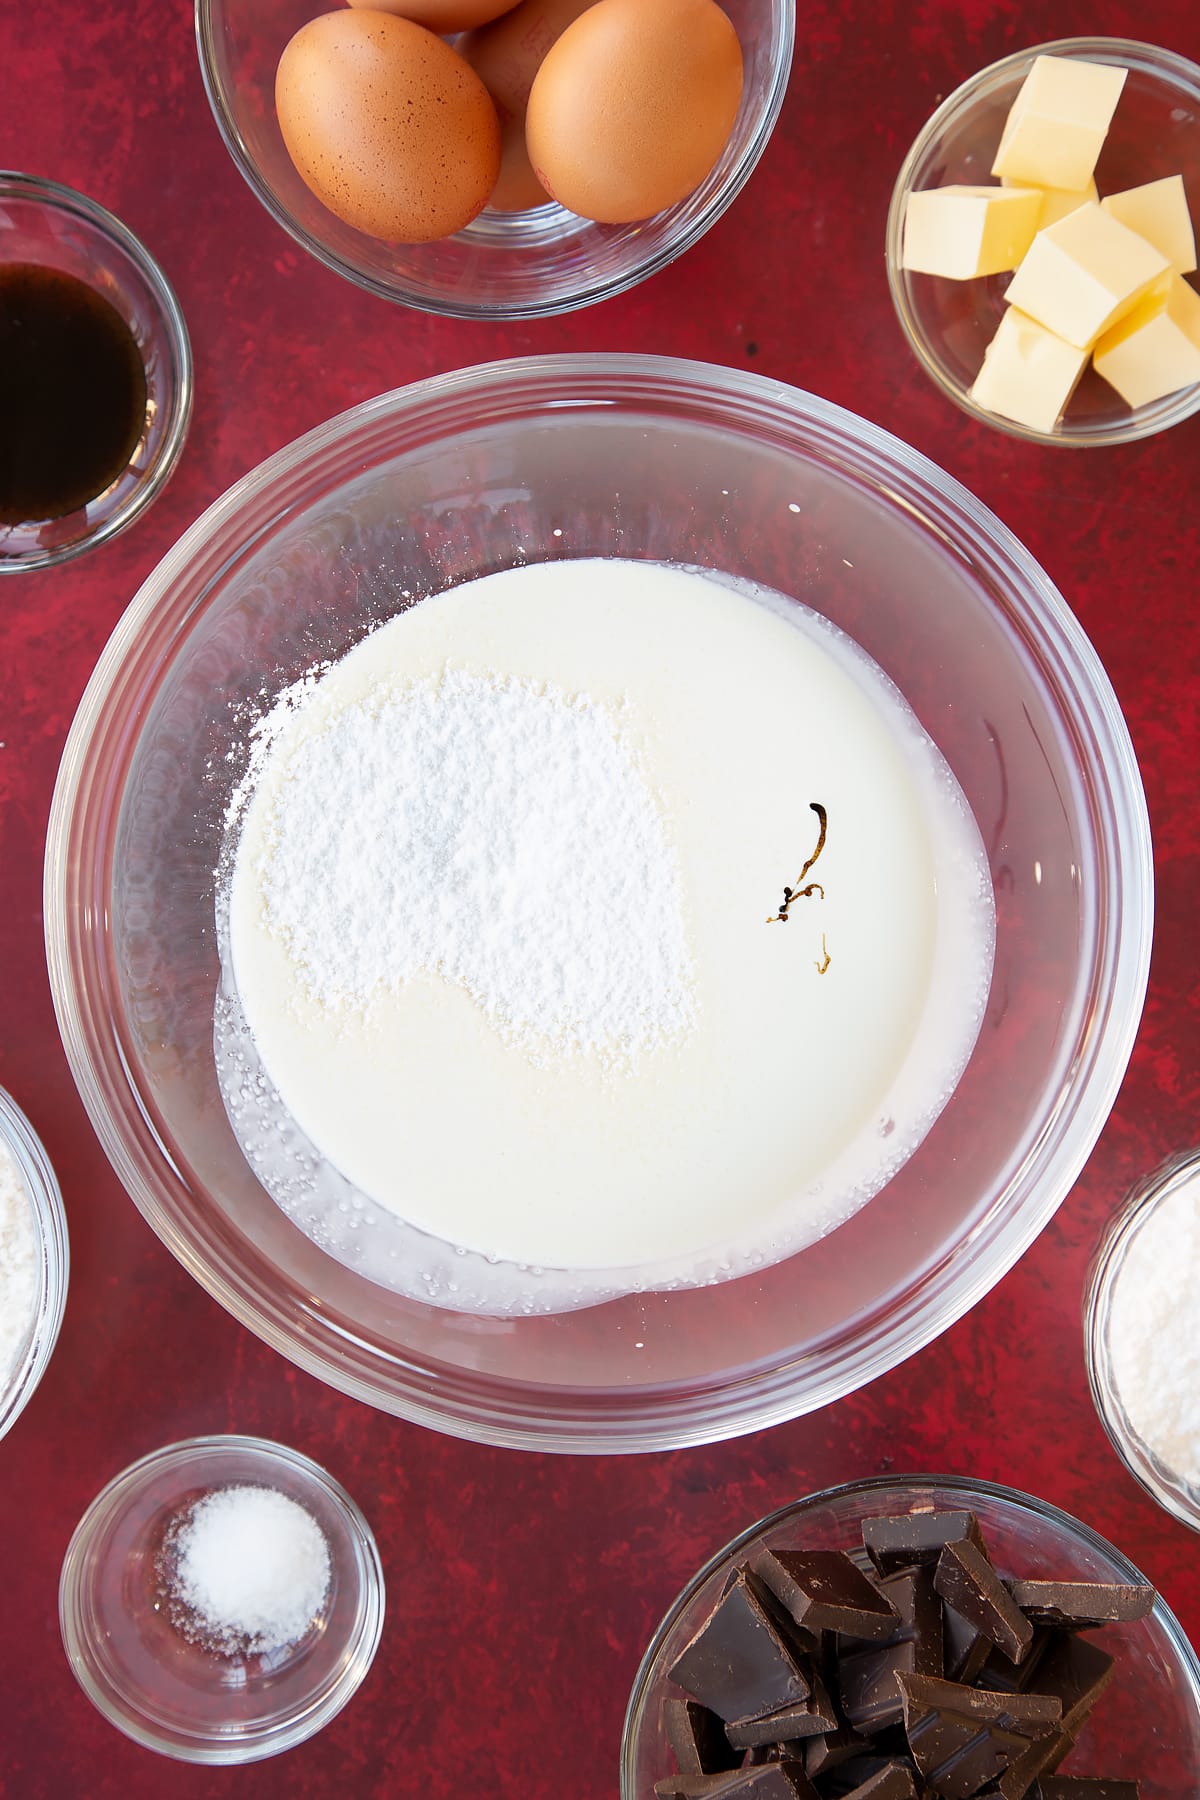 Cream, icing sugar and vanilla in a bowl